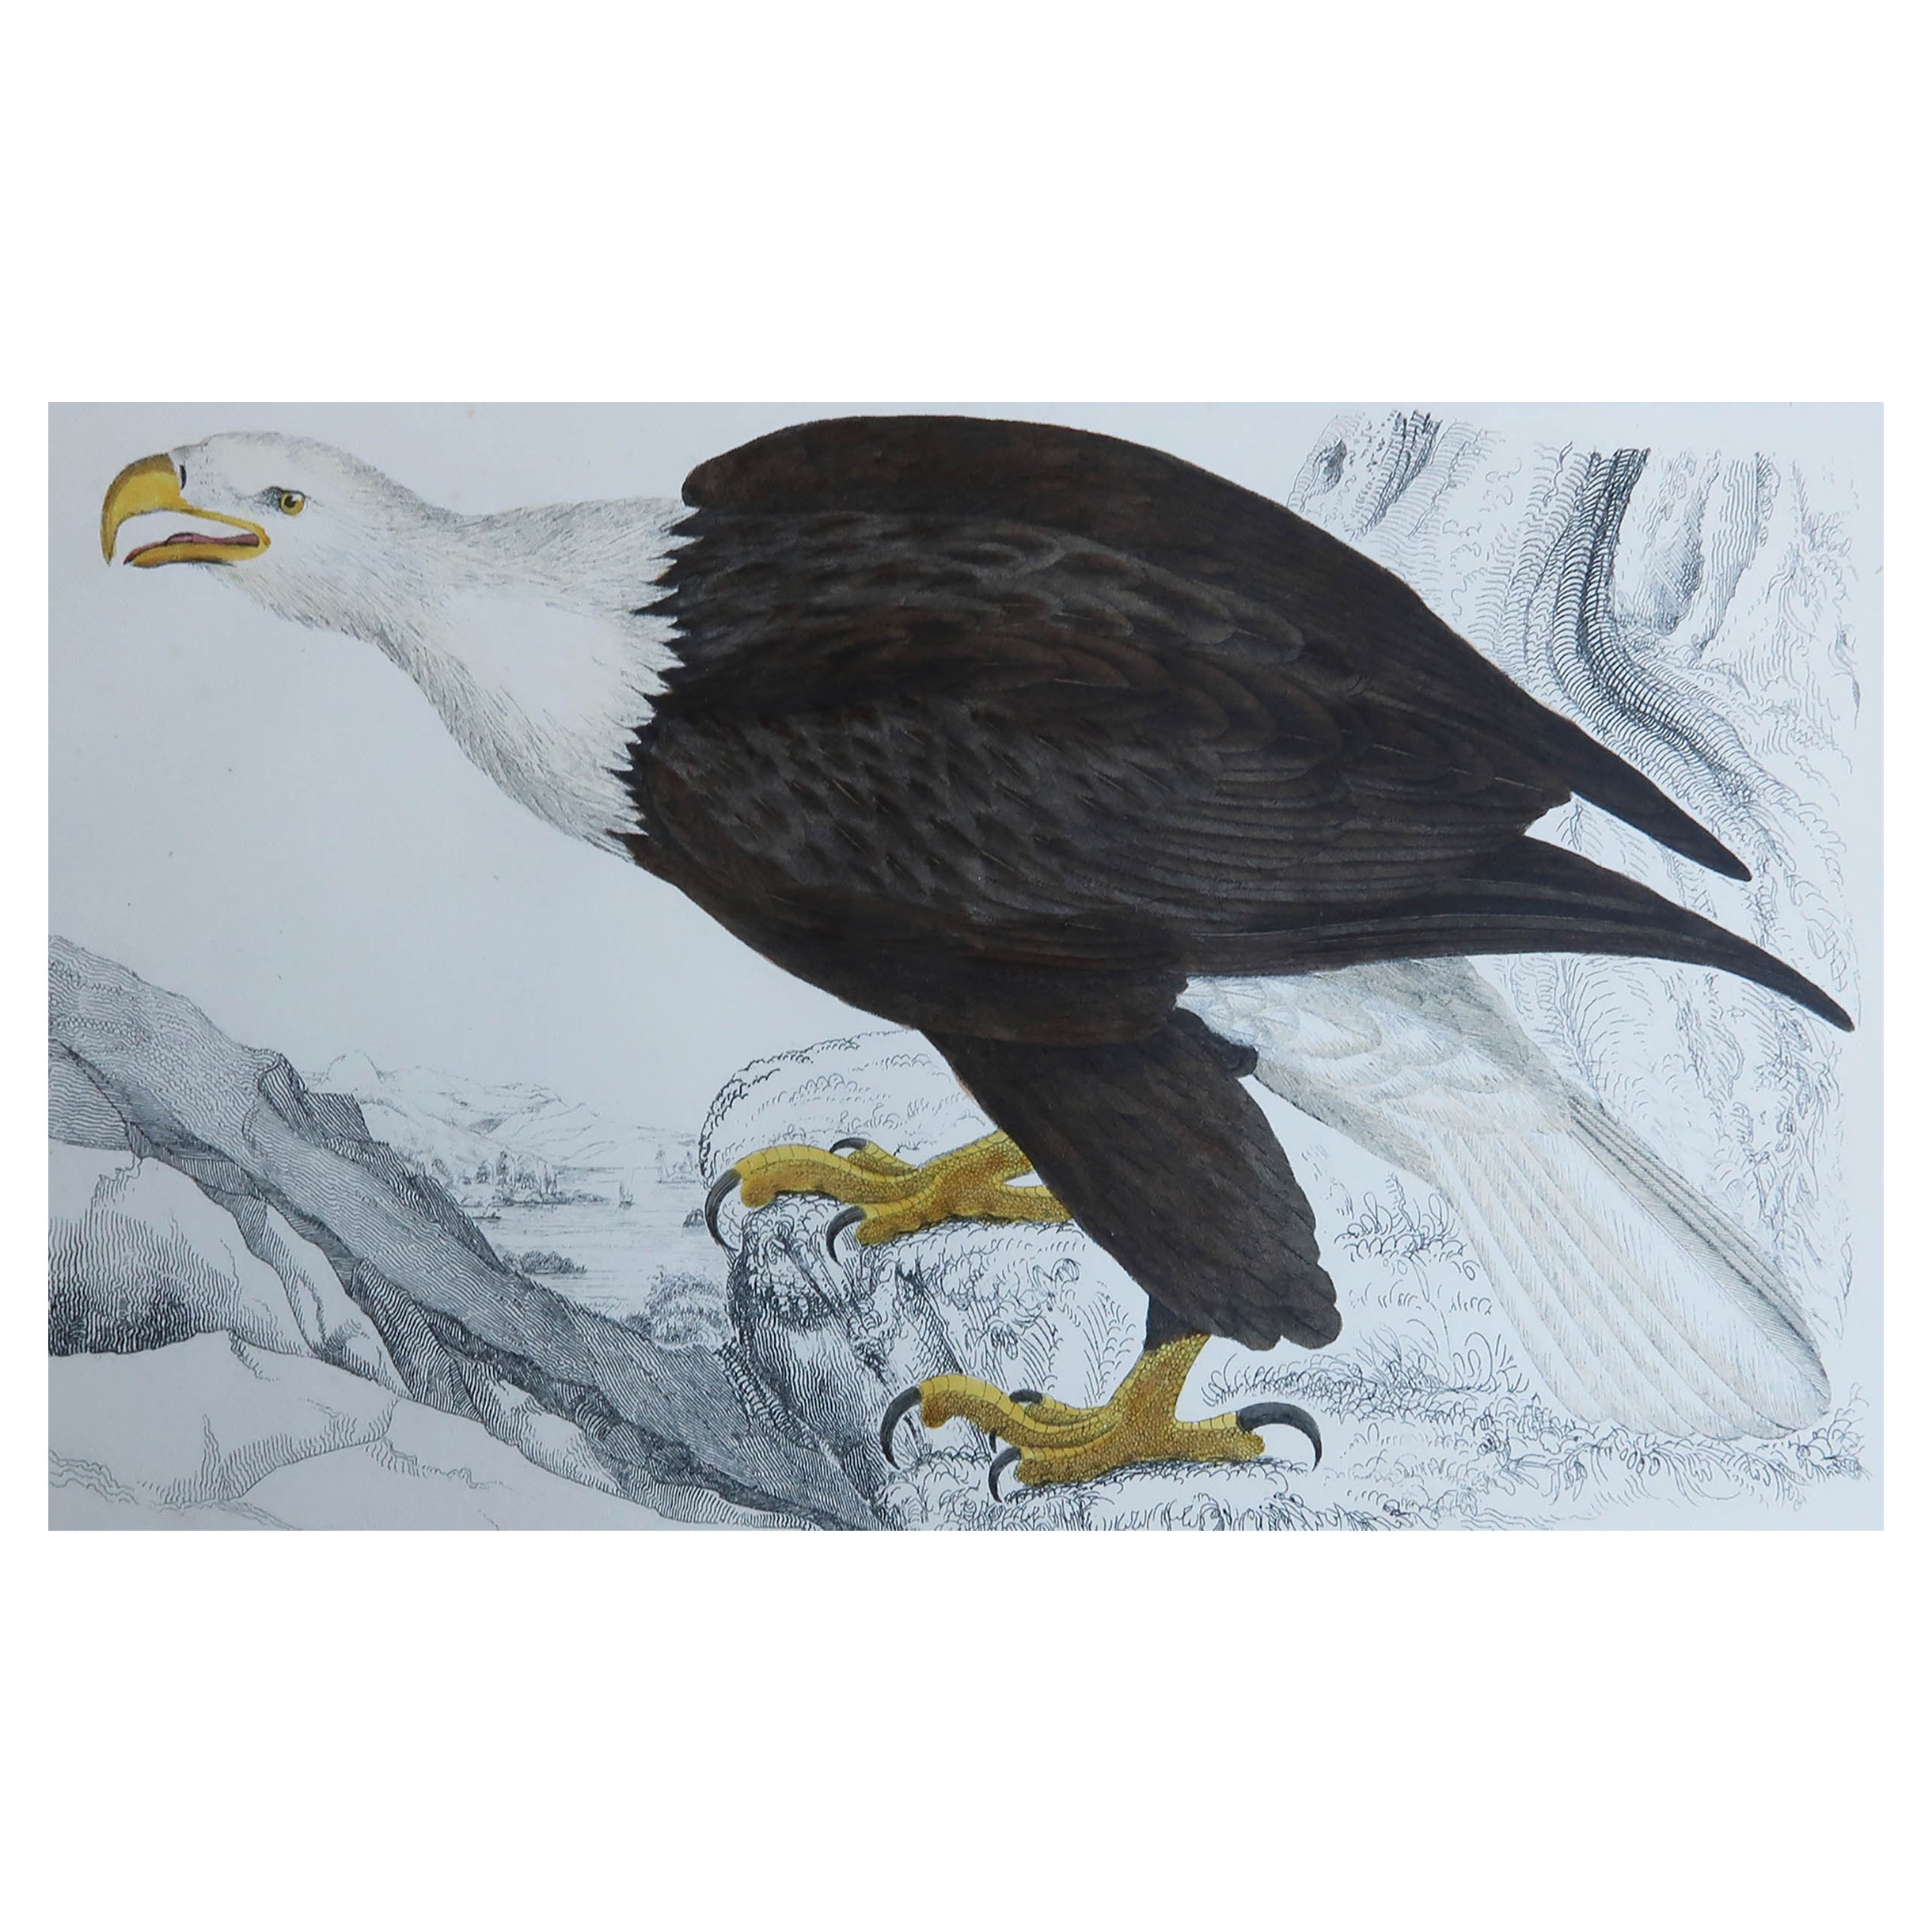 Original Antique Print of an Eagle, 1847 'Unframed'